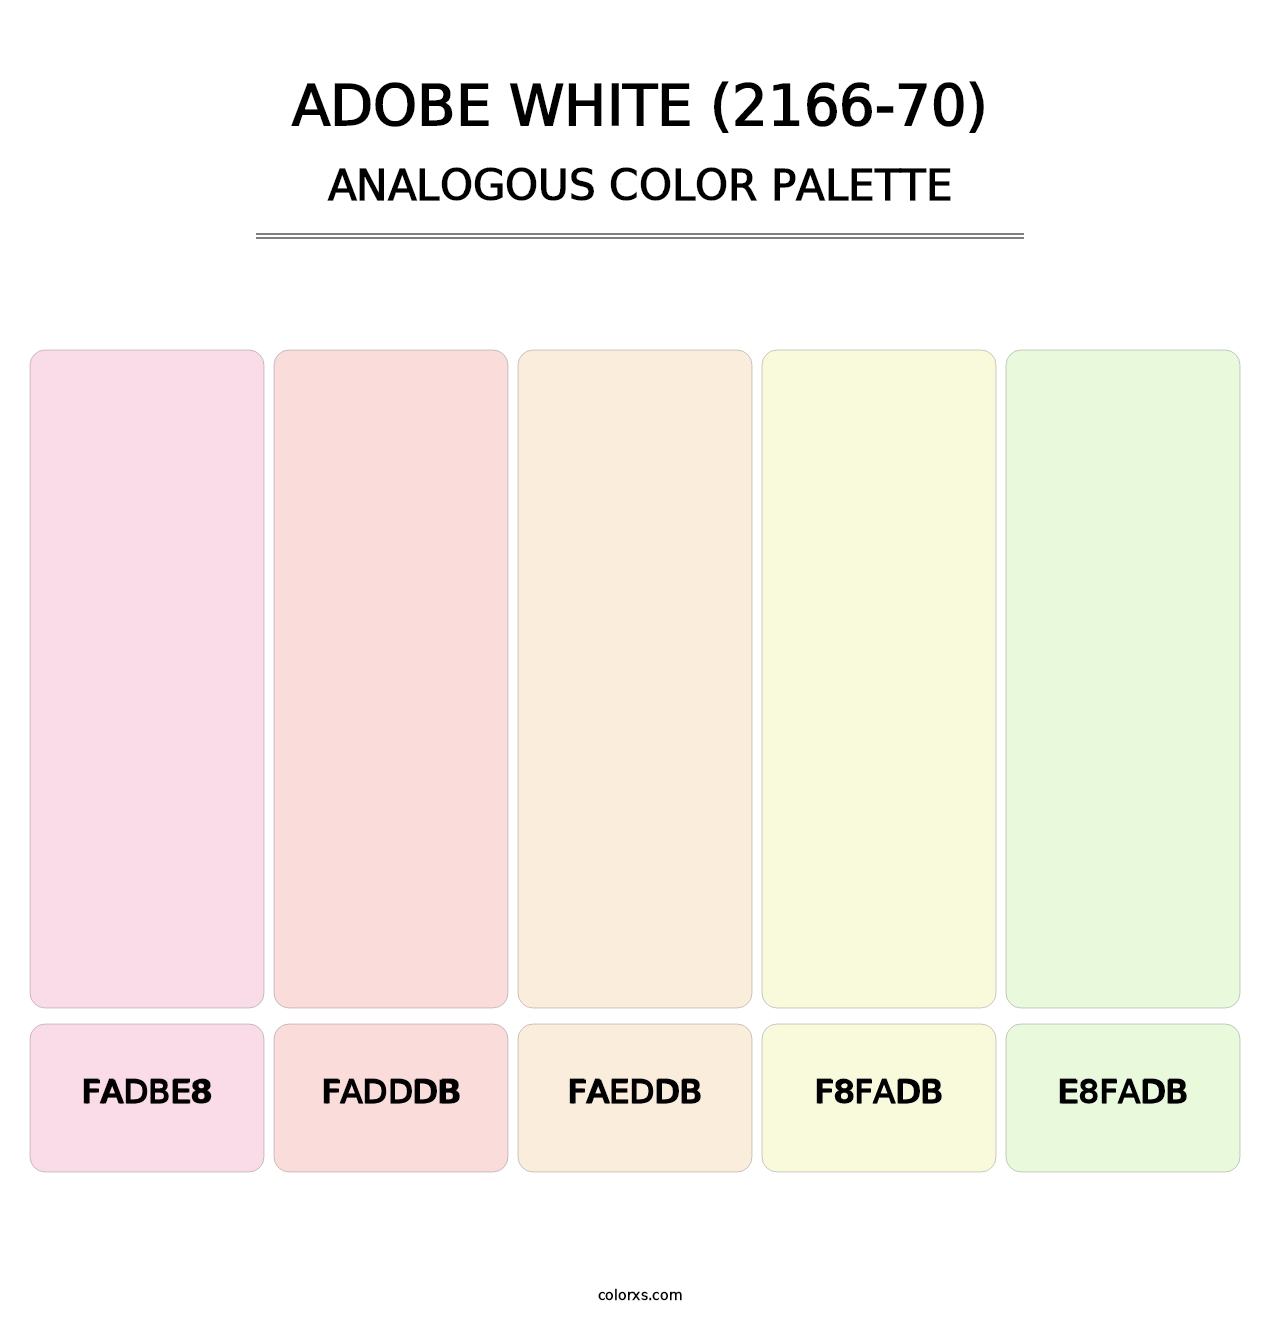 Adobe White (2166-70) - Analogous Color Palette